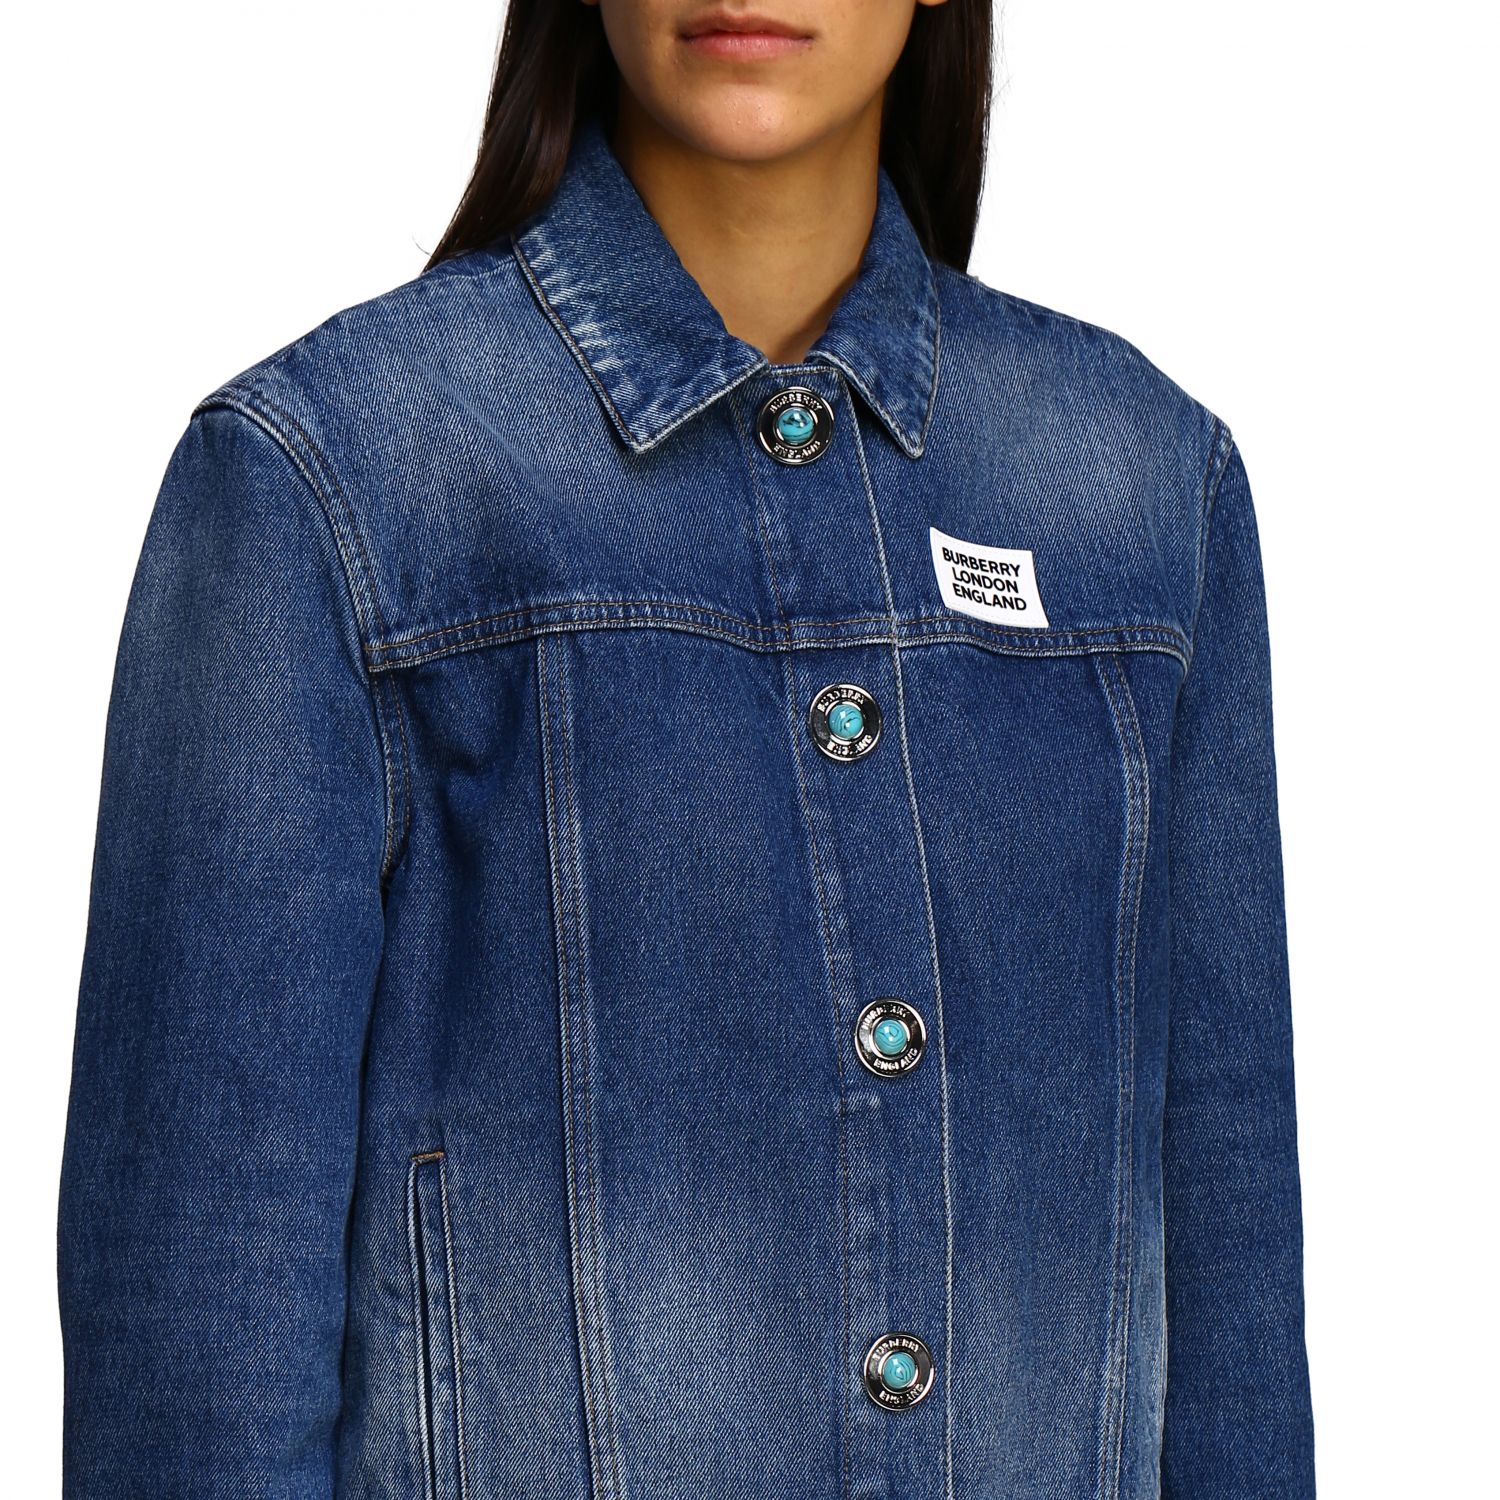 Burberry denim jacket with logo and back pockets | Jacket Burberry